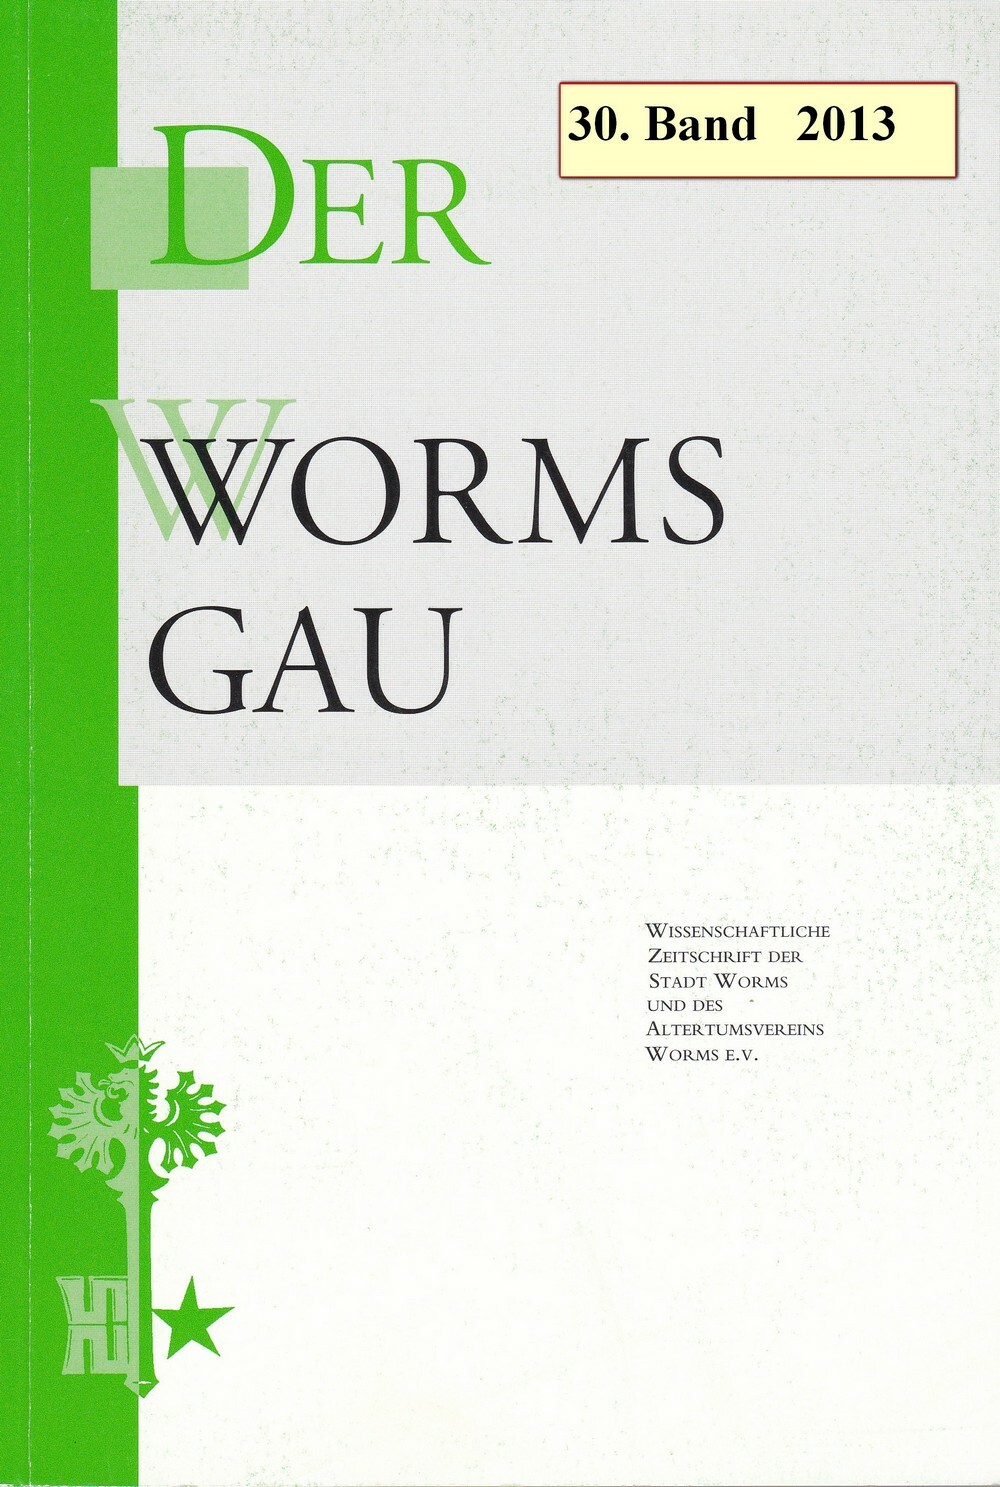 Der Wormsgau 30. Band - 2013 (Kulturverein Guntersblum CC BY-NC-SA)